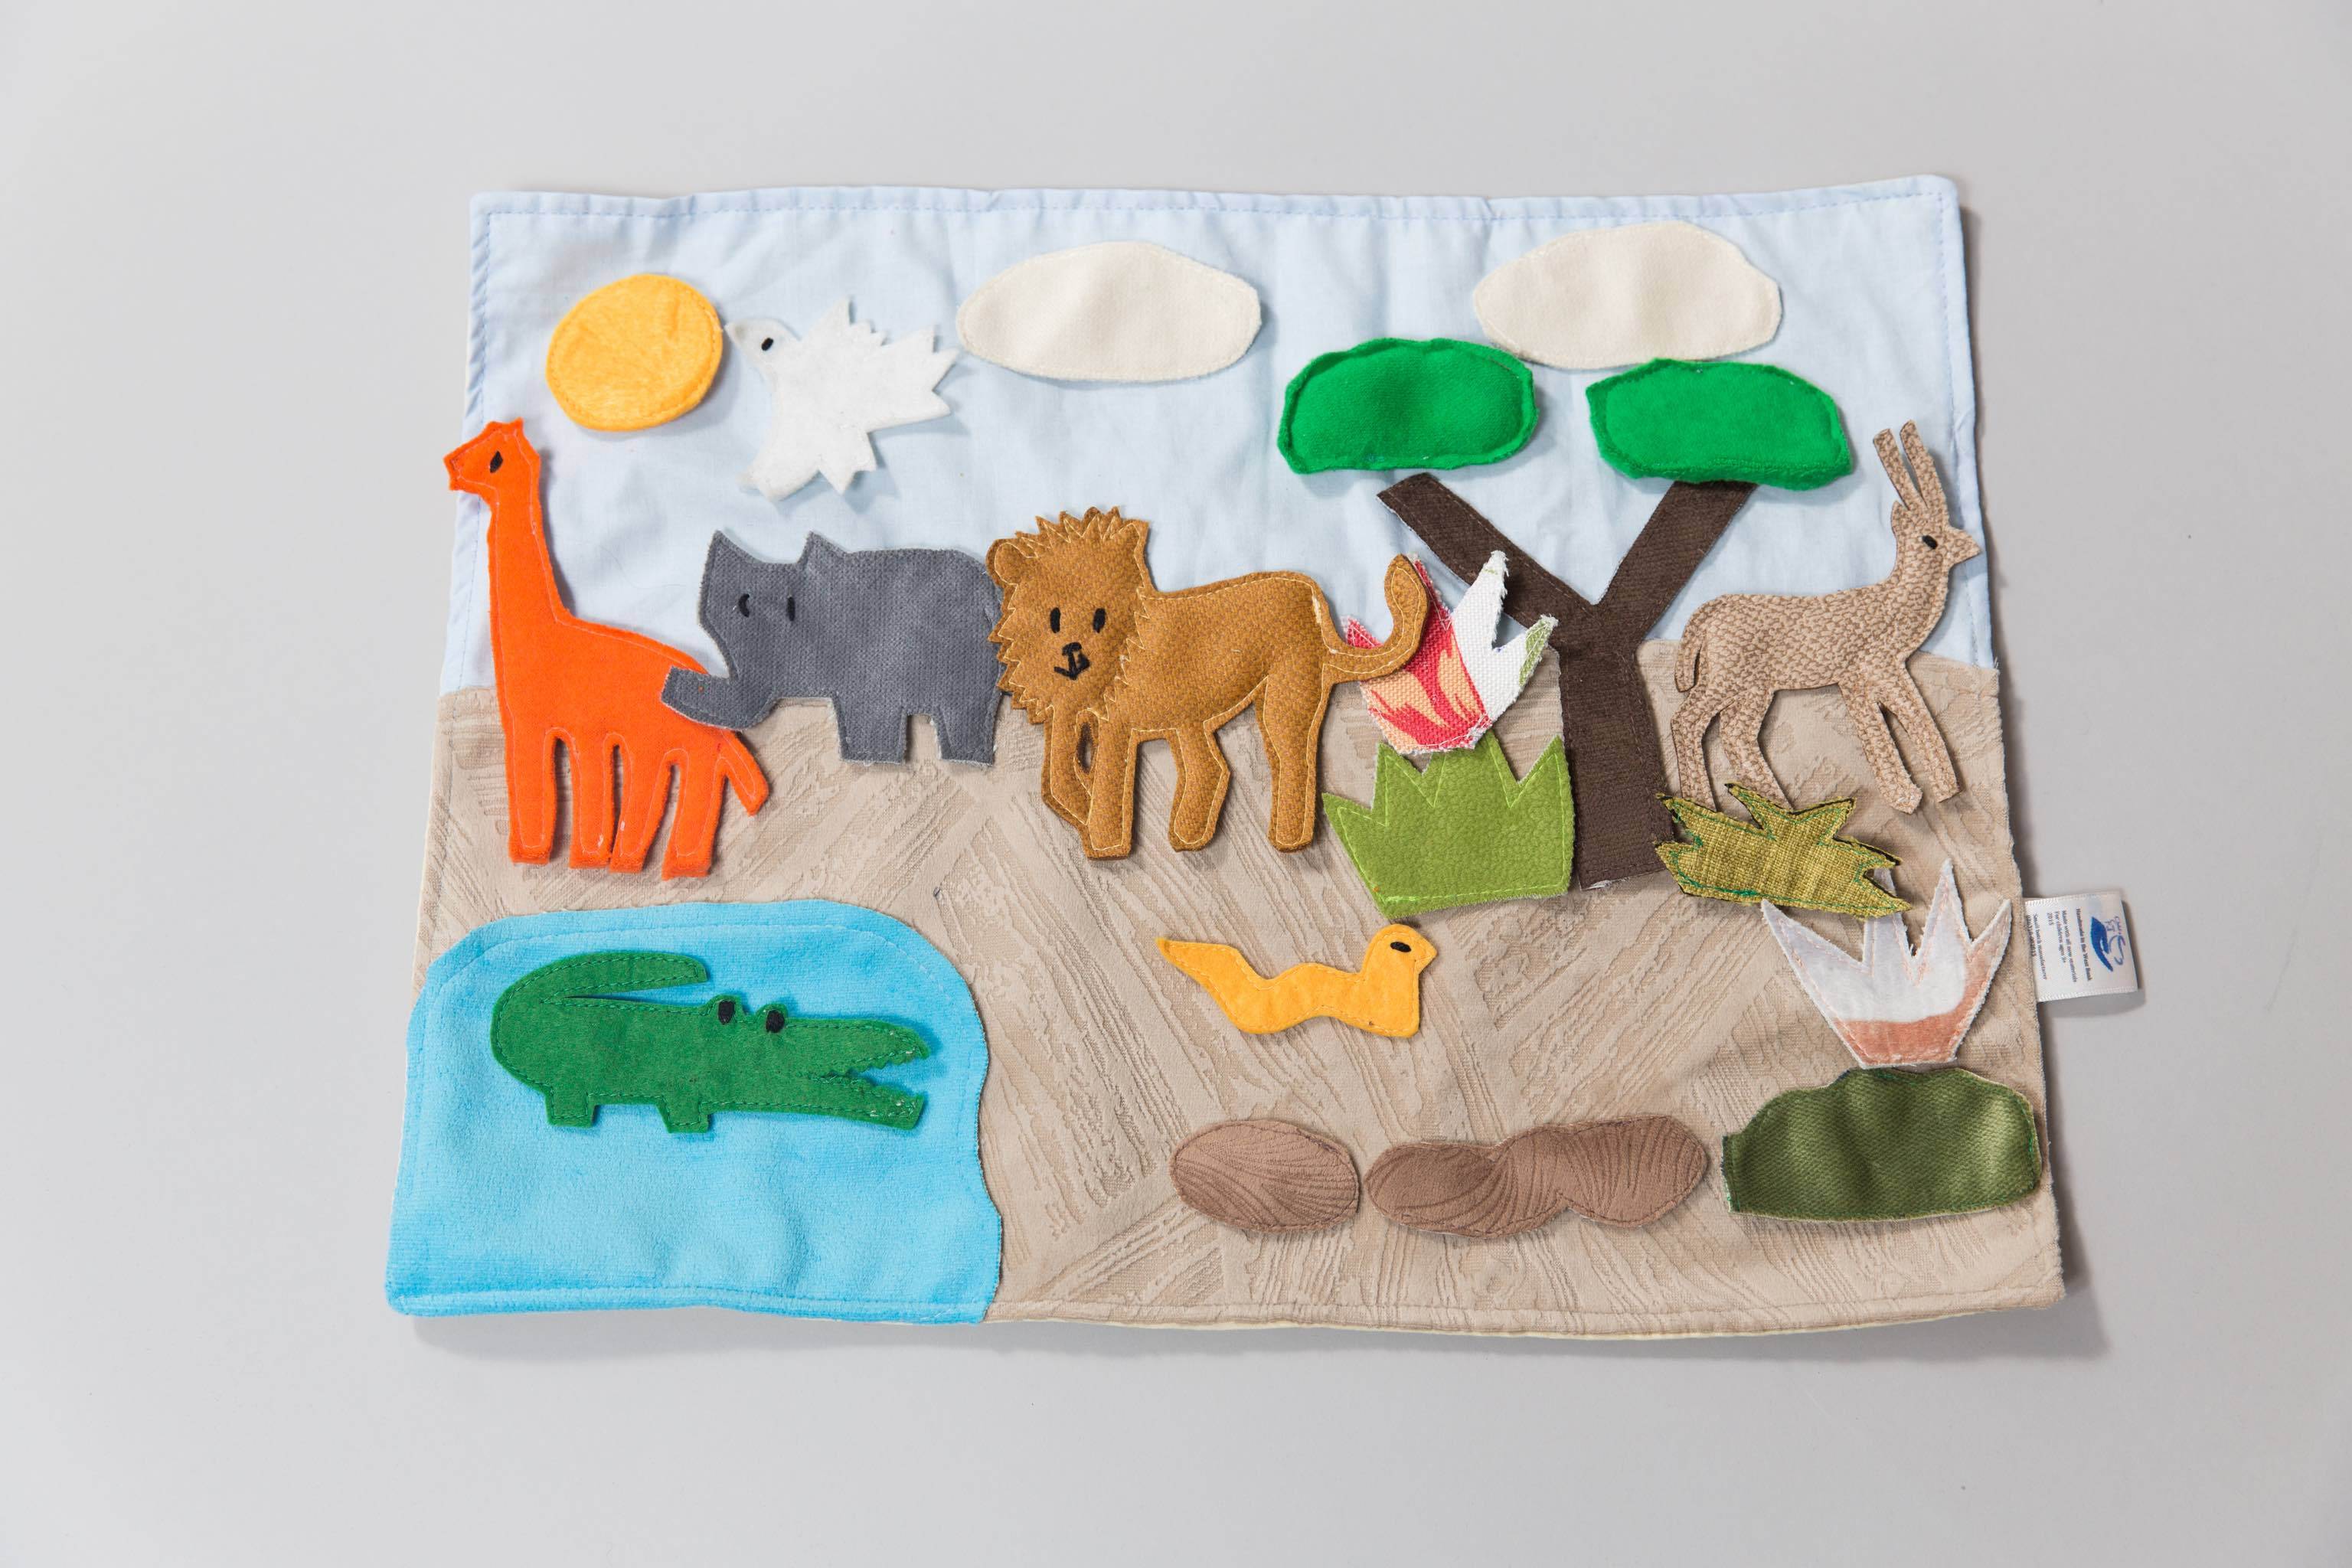 A photo of the Safari Habitat Storyboard playmat and pieces